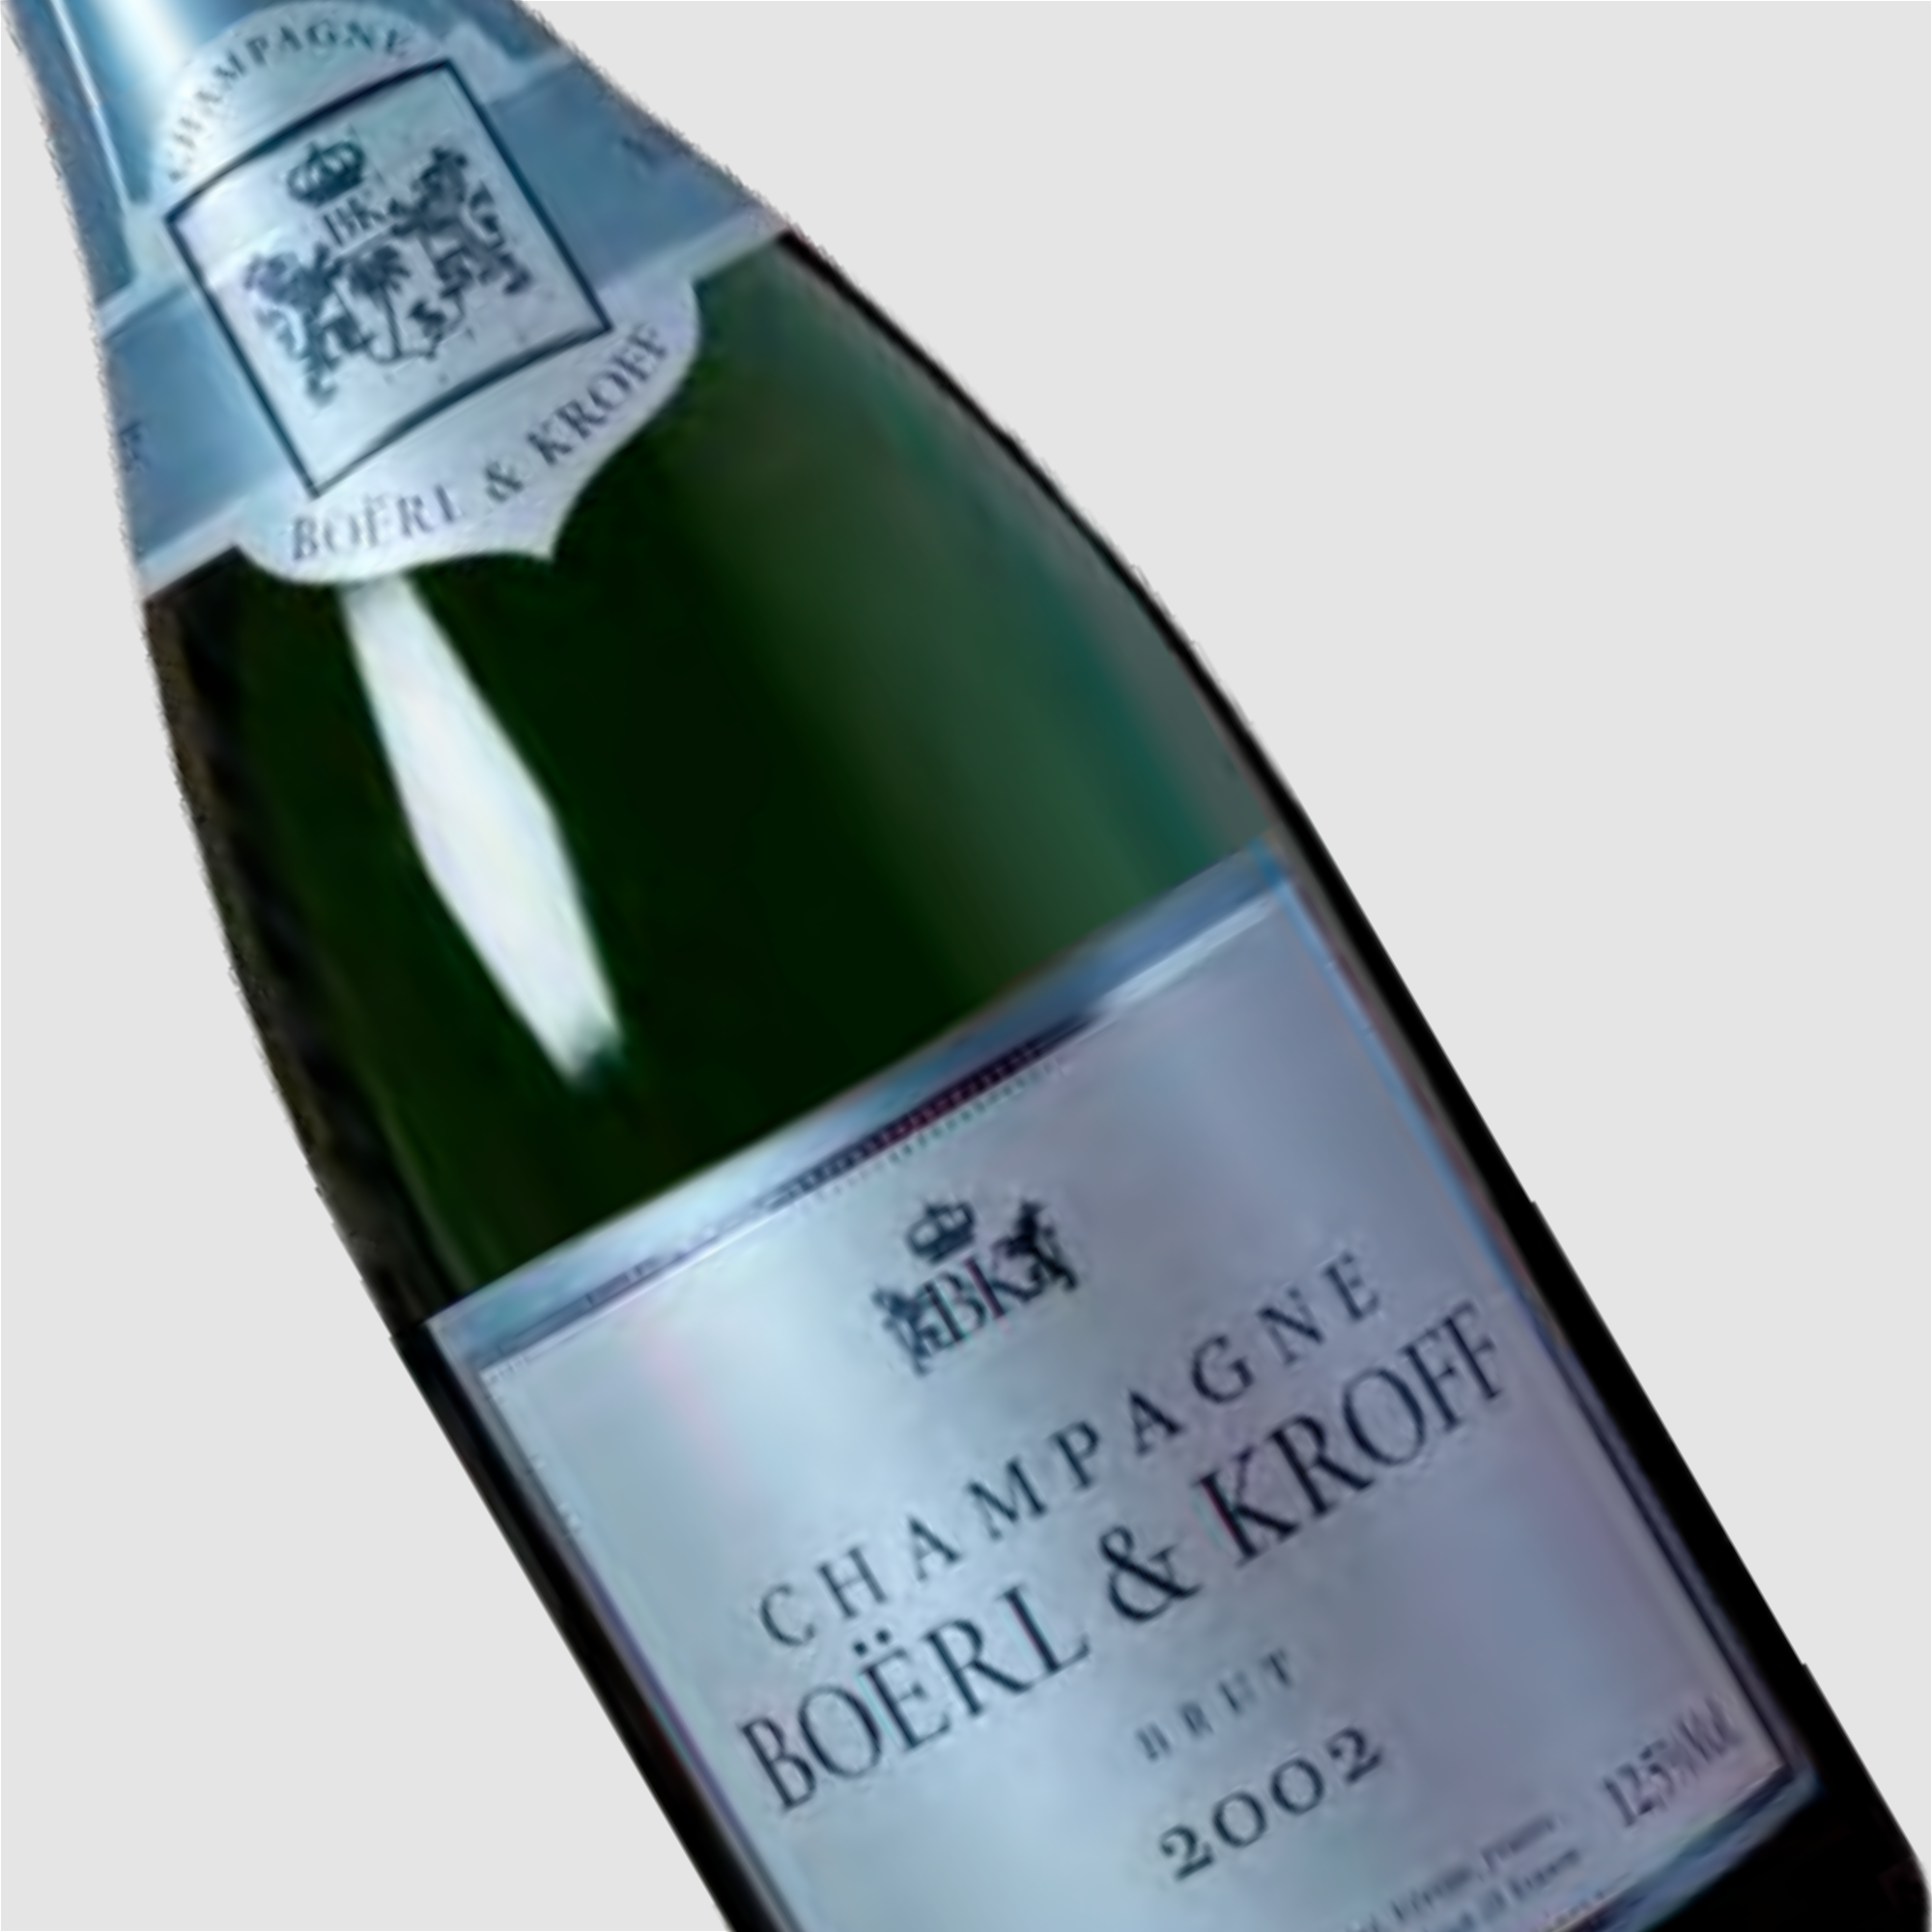 Champagne Boërl &amp; Kroff 2002 Magnum: Initial Bottle Offering priced at 6600 euros